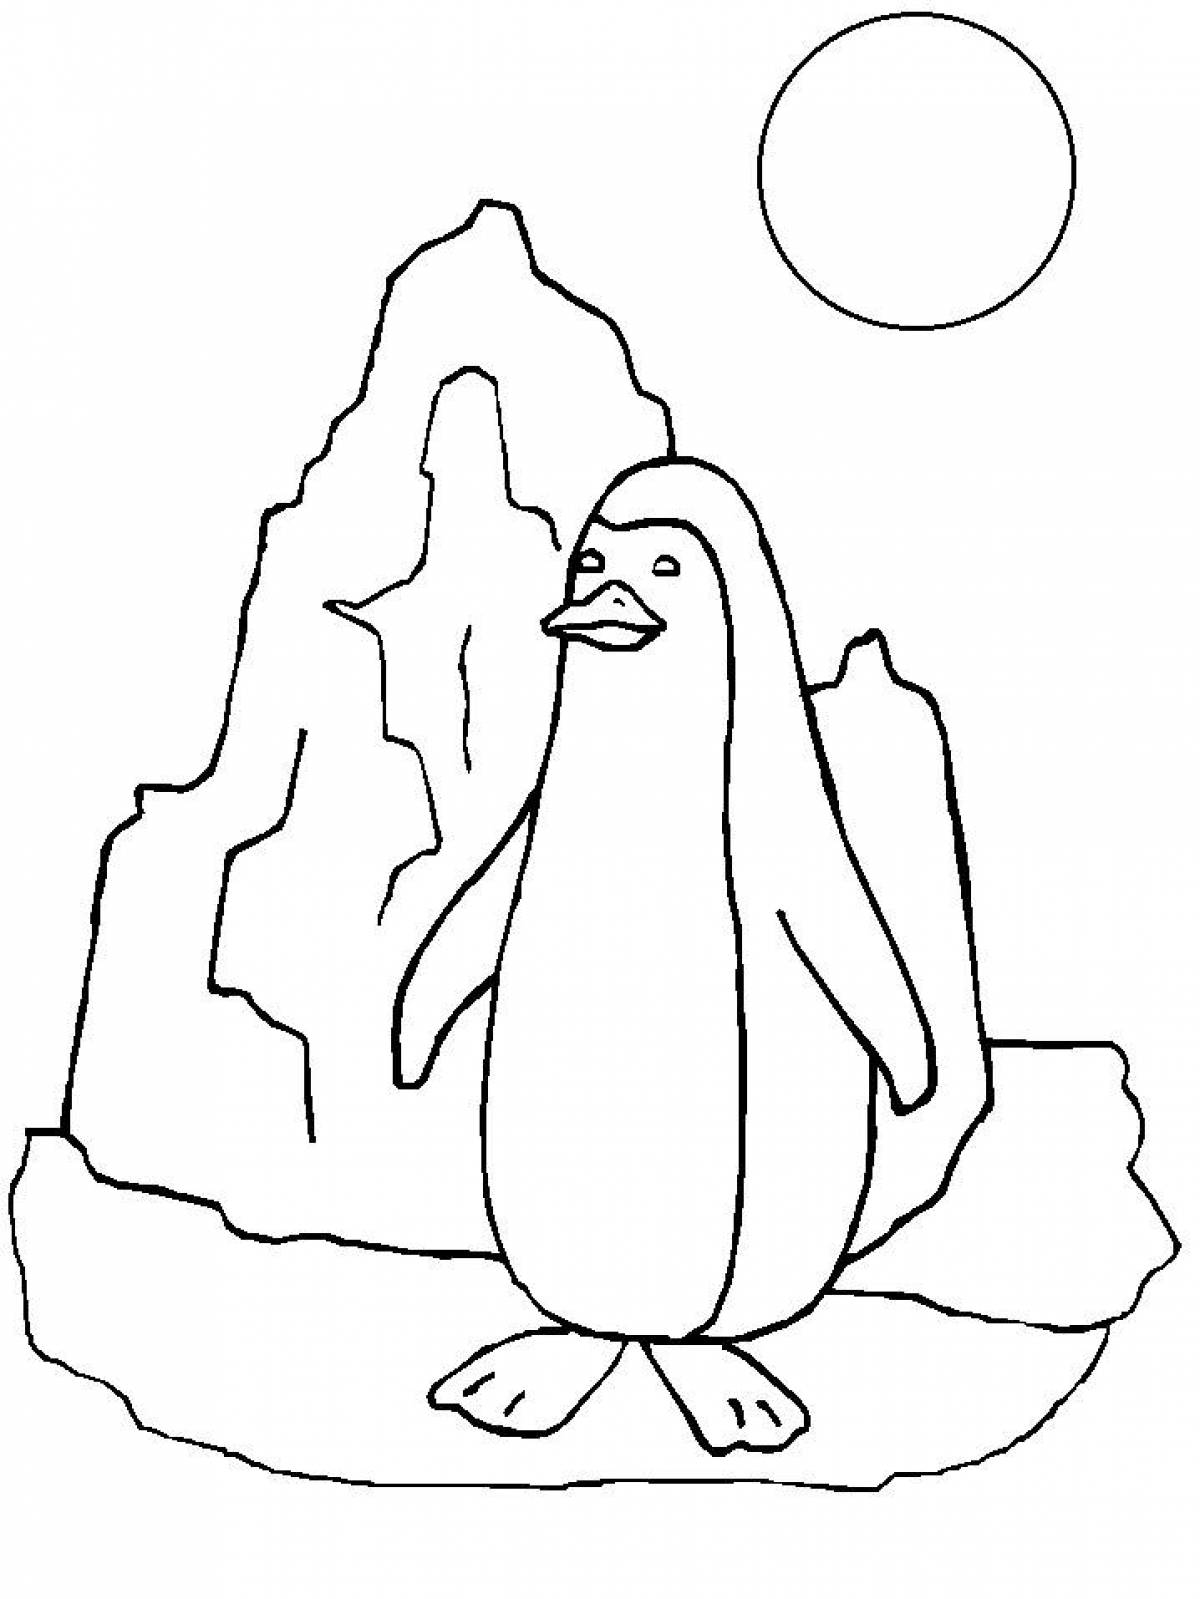 A fun penguin coloring book for kids